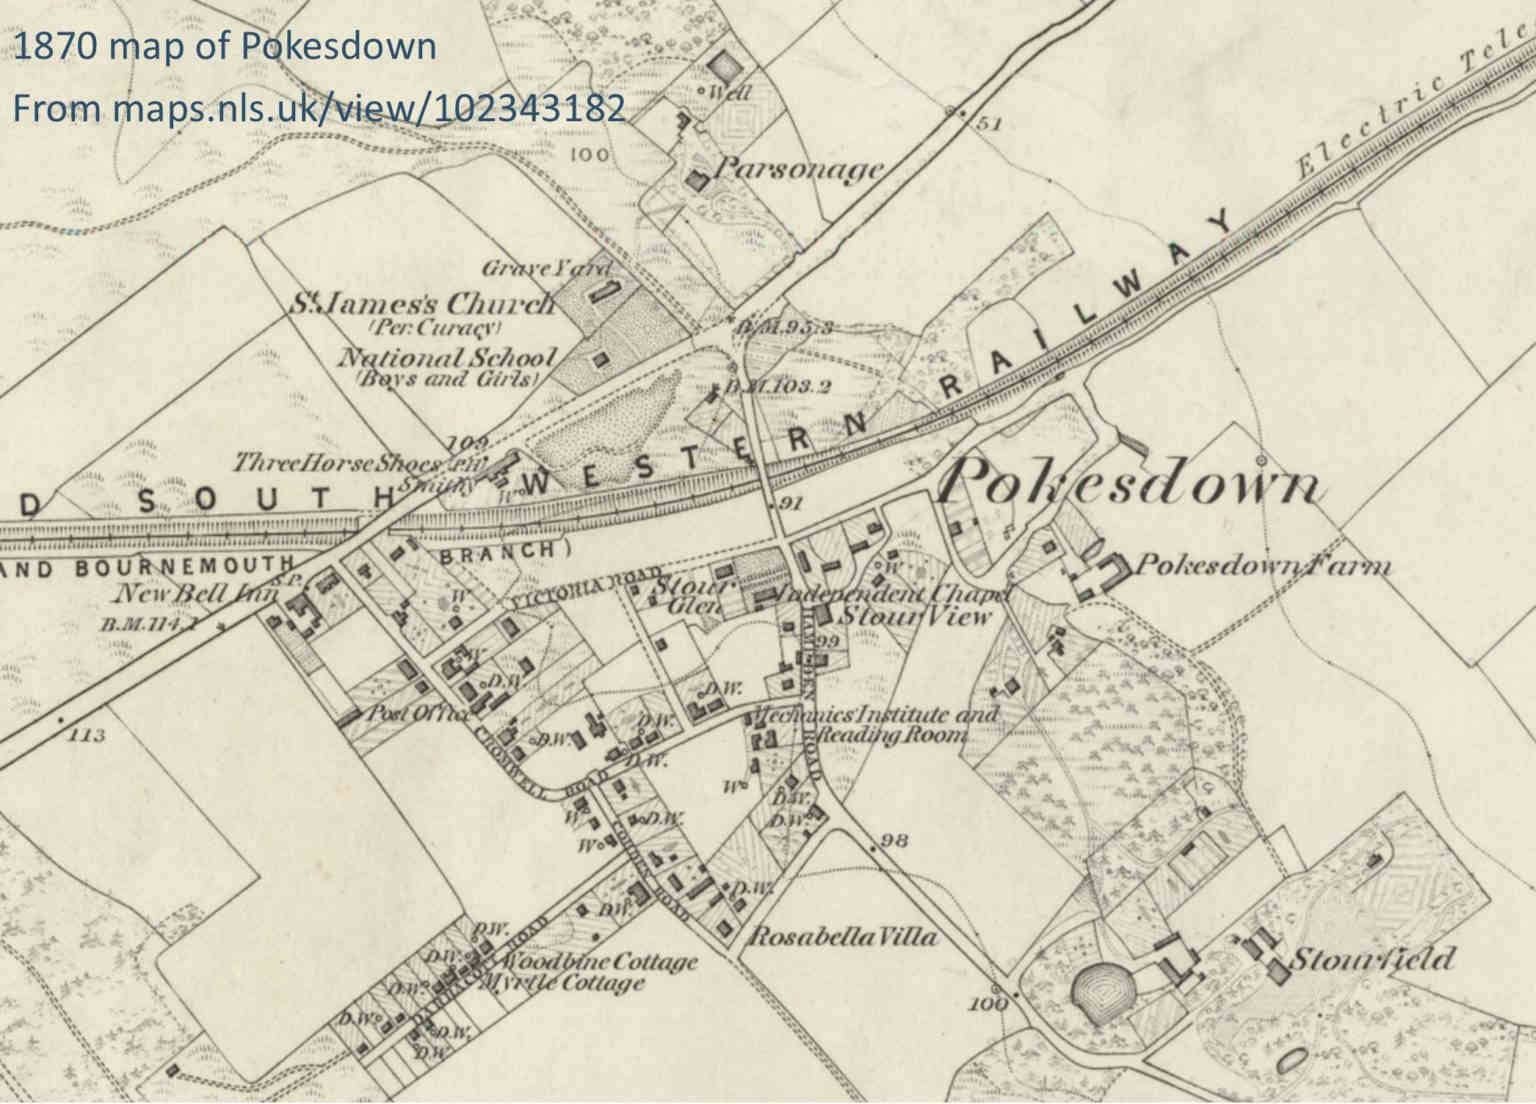 1870 map of Pokesdown showing Pokesdown Farm